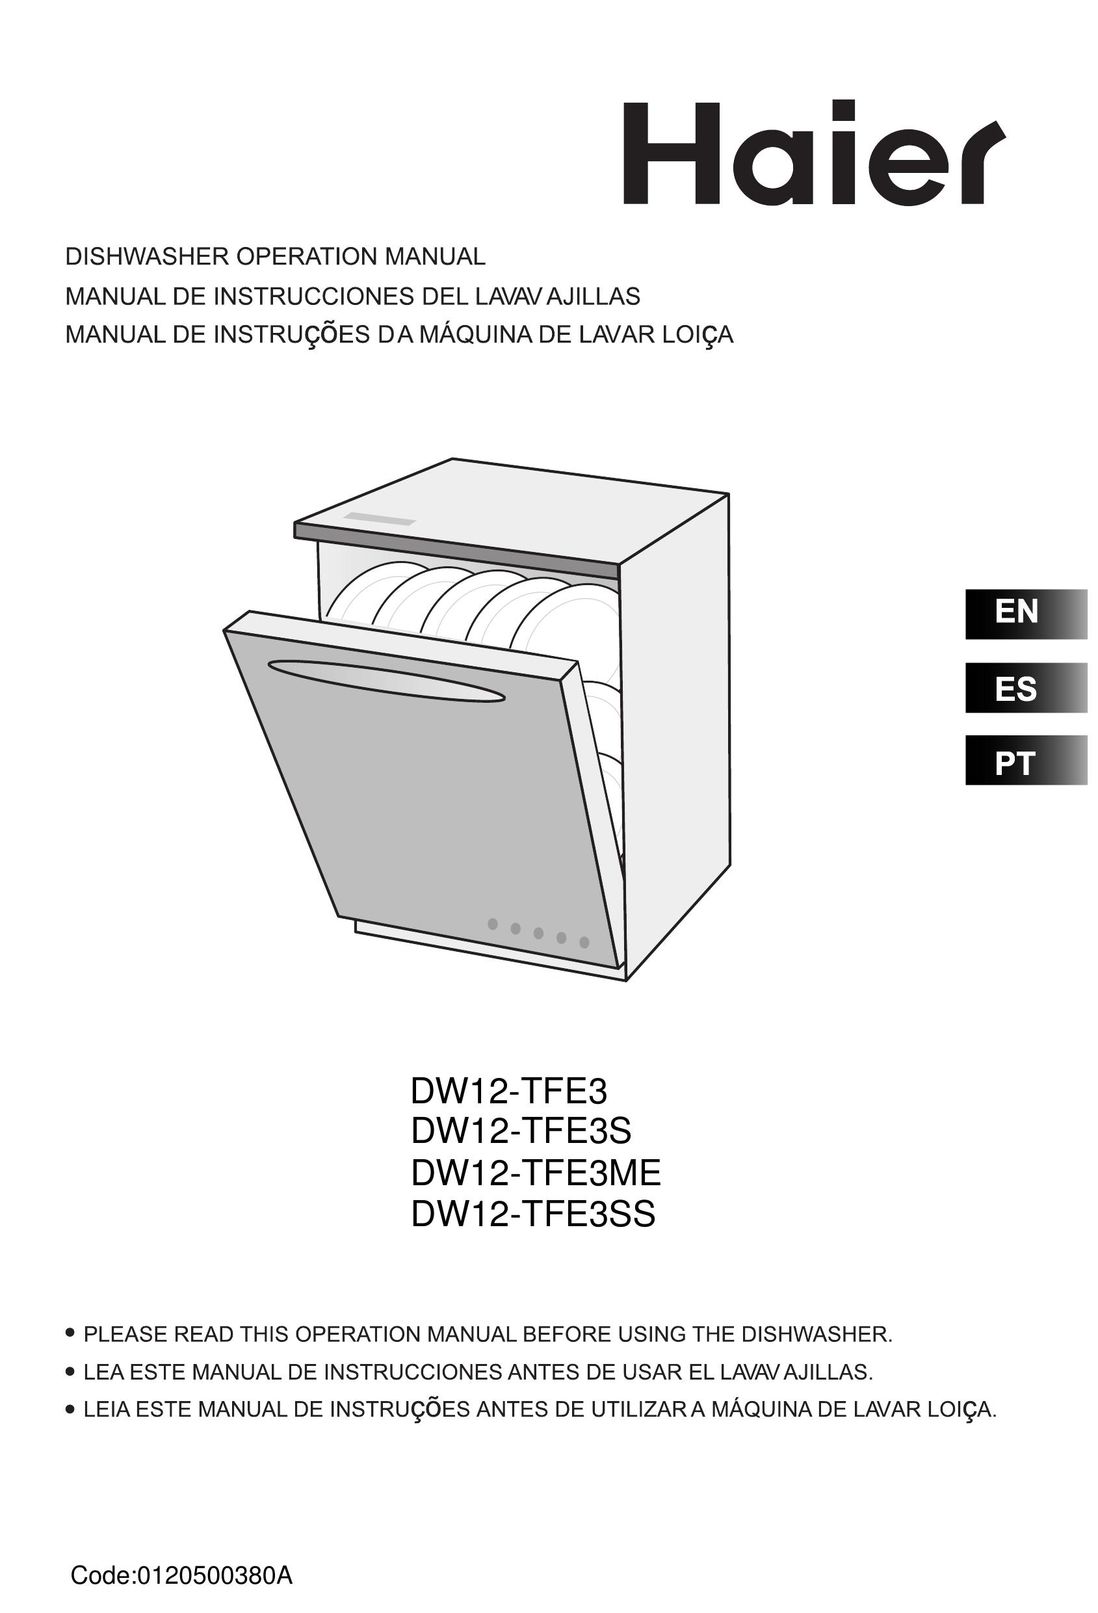 Haier DW12-TFE3SS Dishwasher User Manual